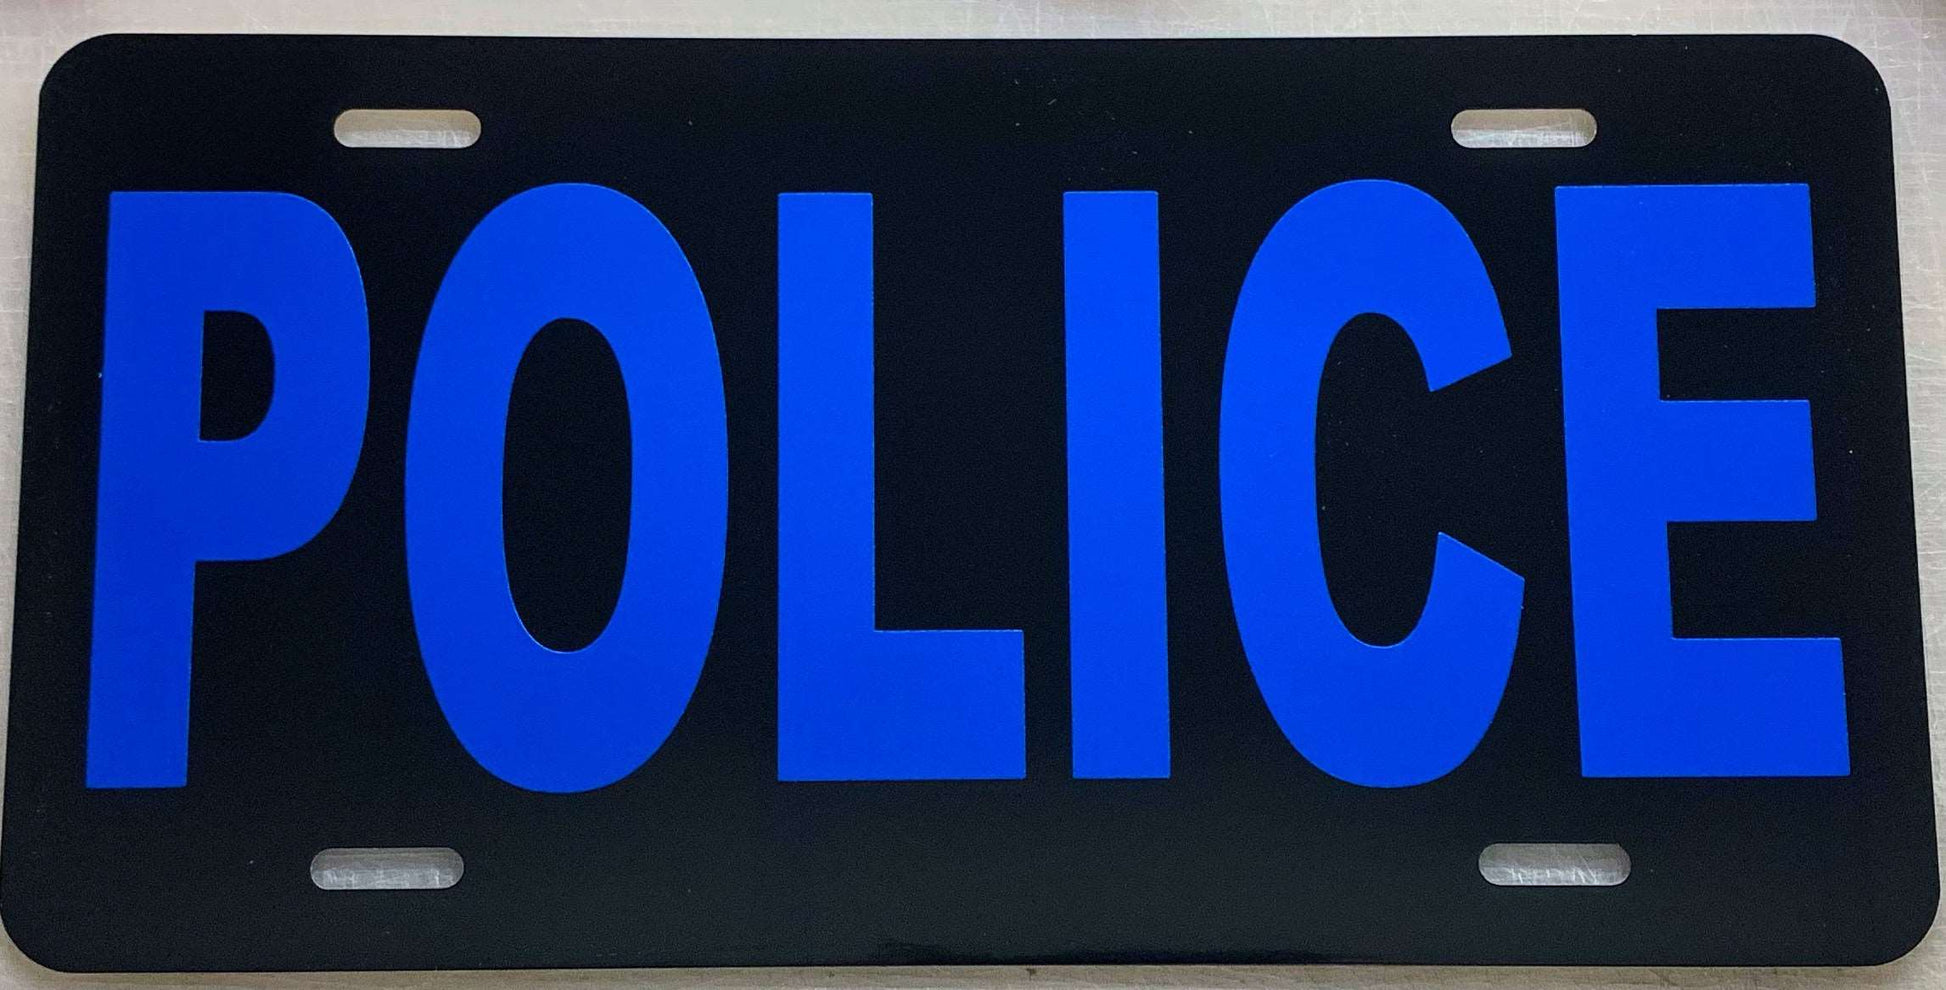 Police Reflective License Plate-FrontLine Designs, LLC 